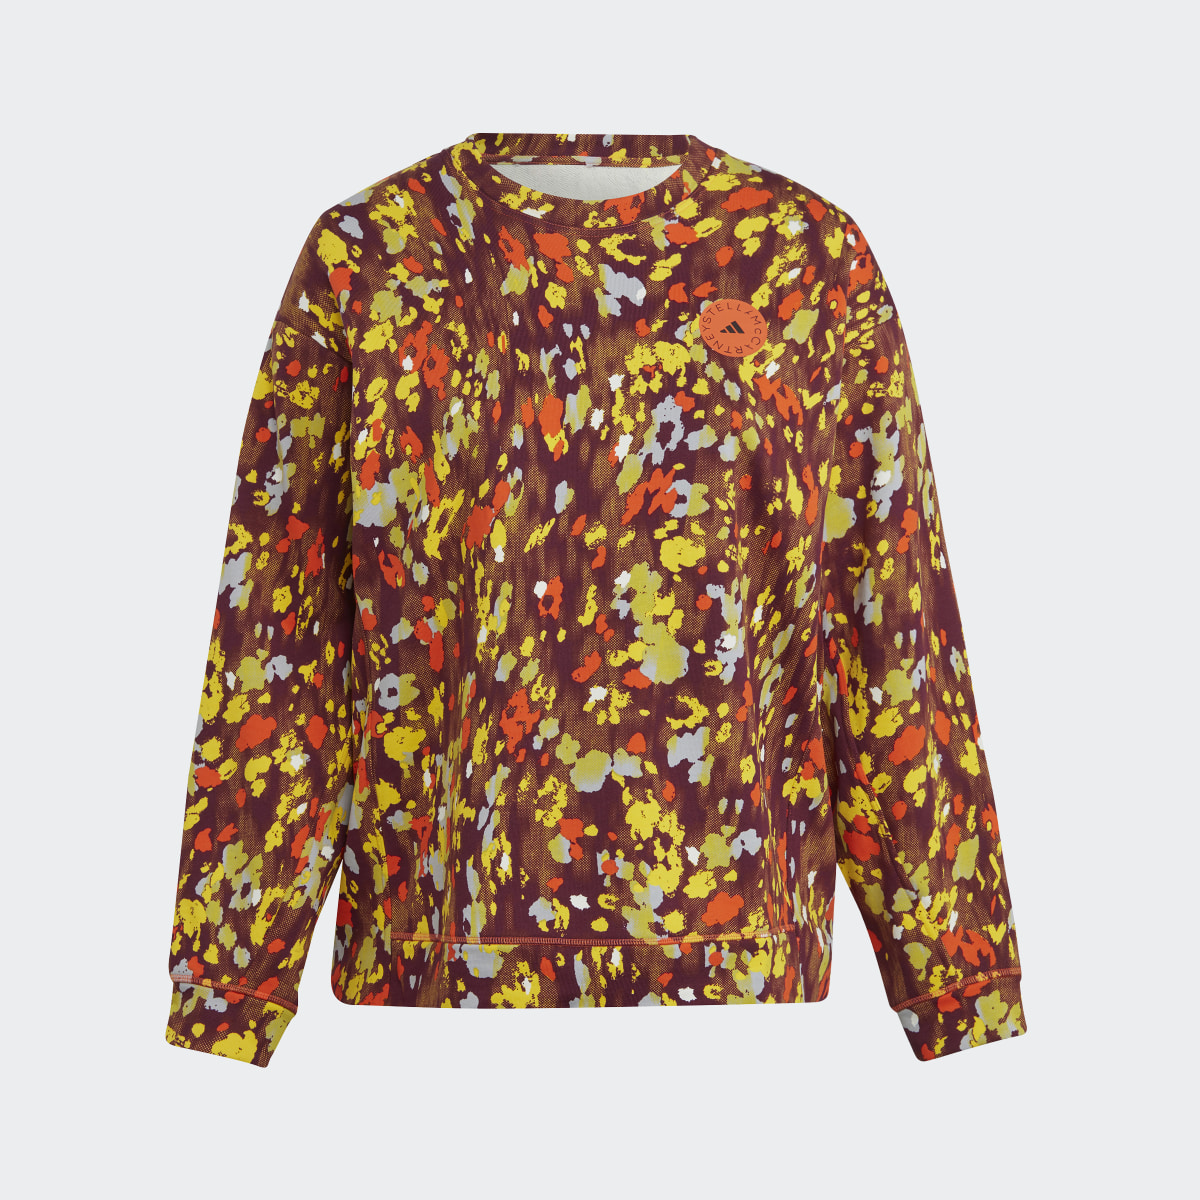 Adidas by Stella McCartney Floral Print Sweatshirt - Plus Size. 4